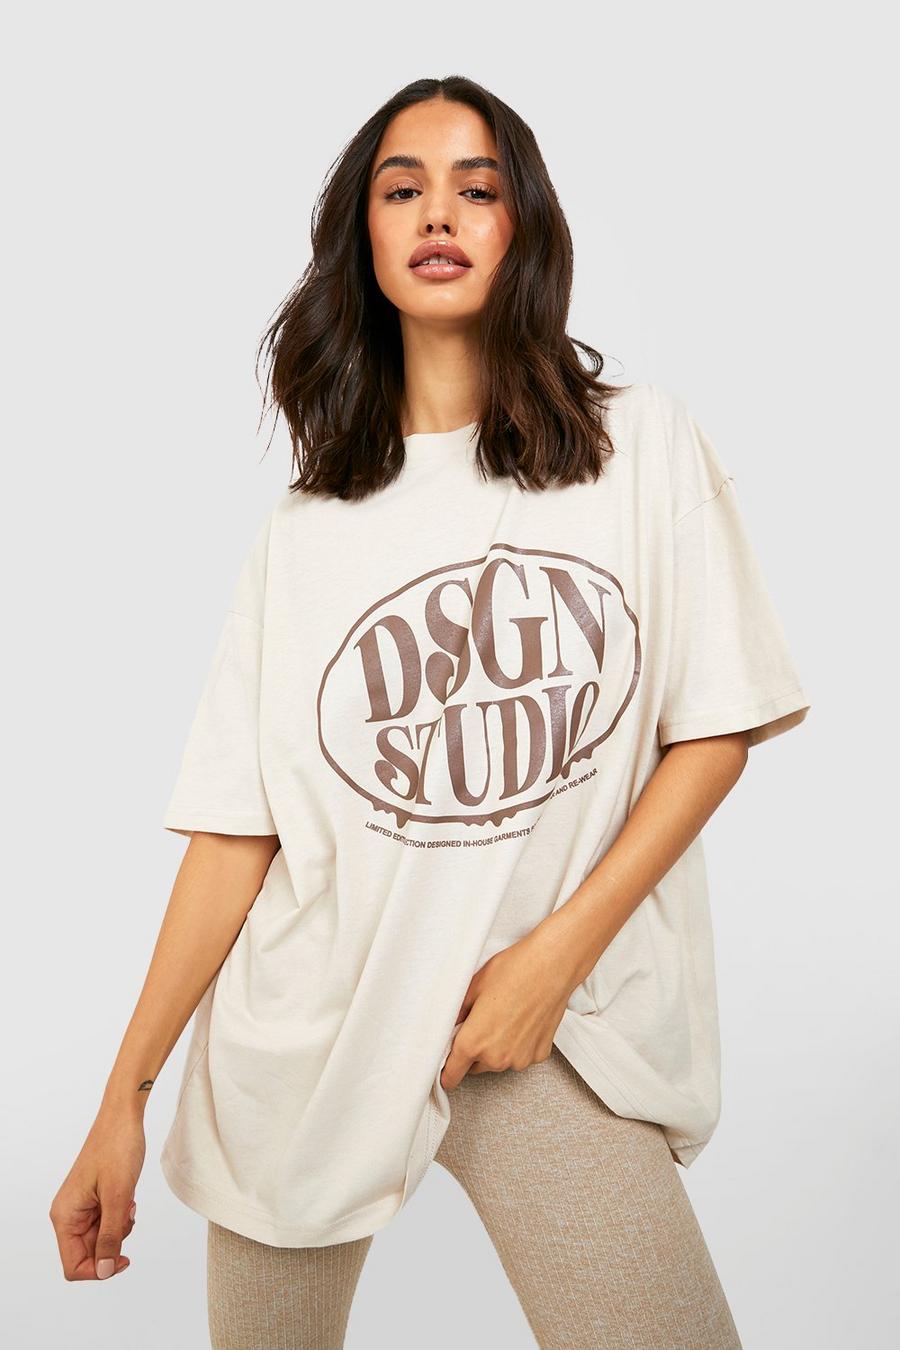 Oversize T-Shirt mit Dsgn Studio Print, Sand